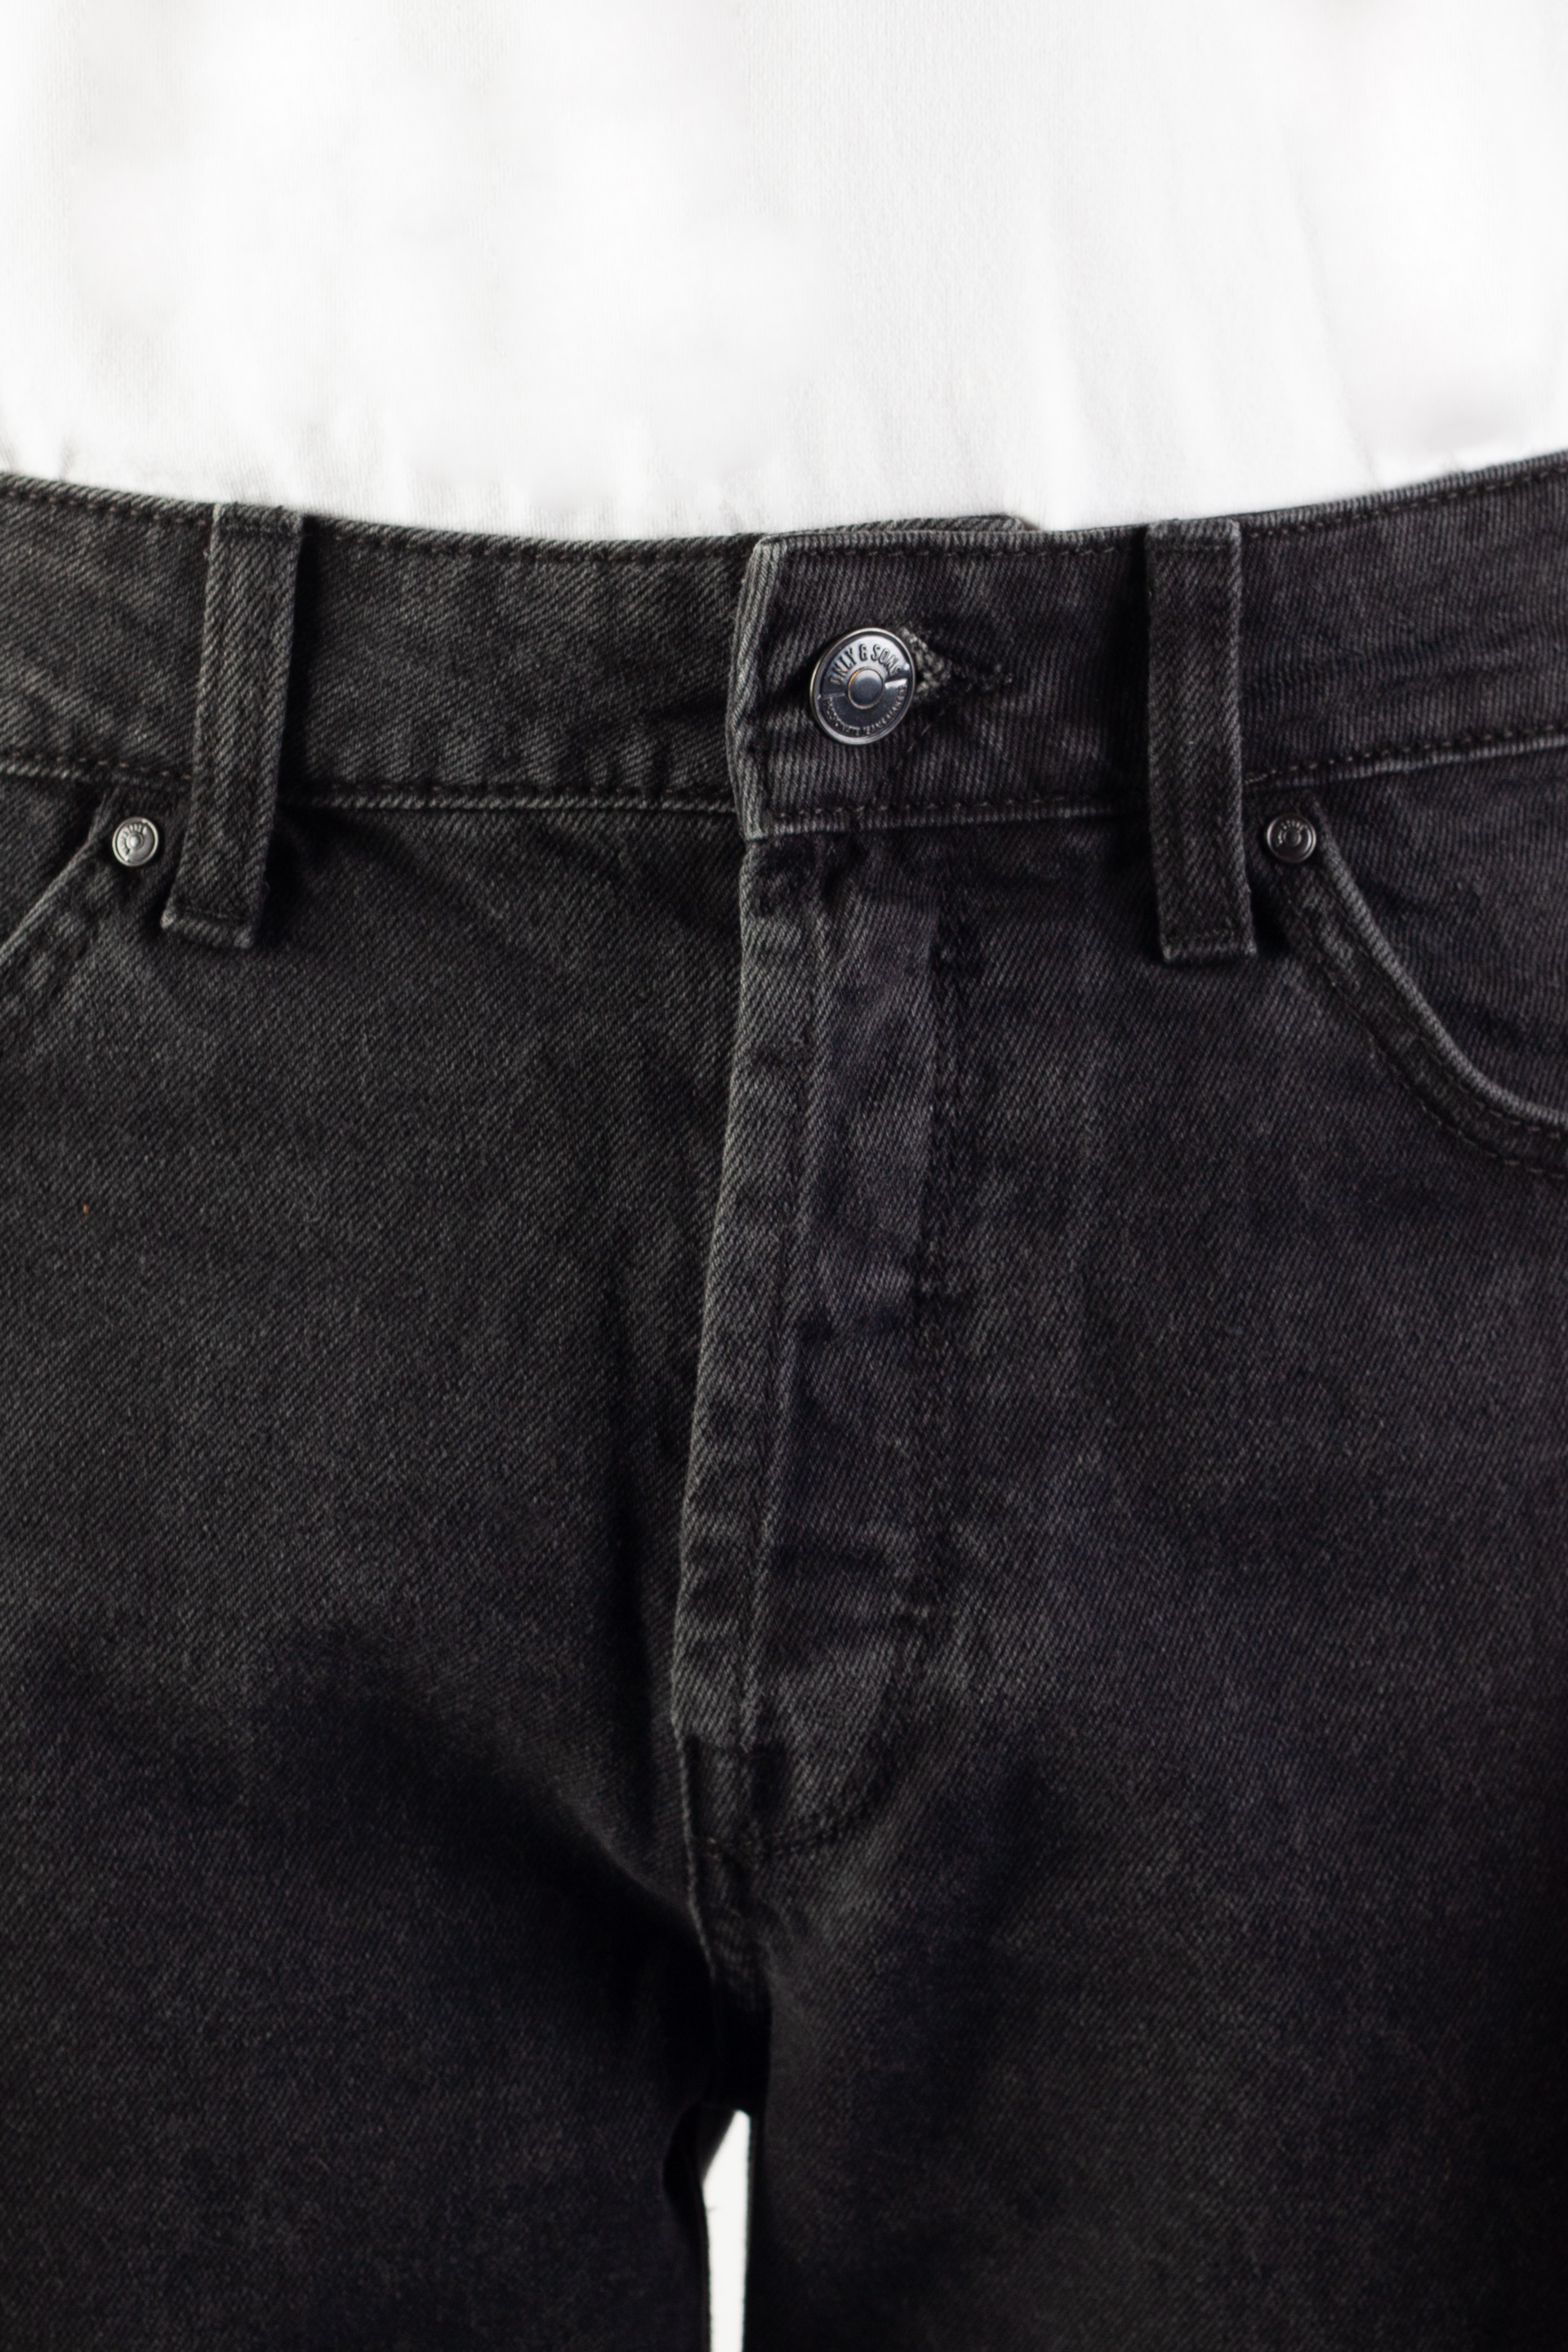 Jeans ONLY & SONS 22022962-Black-Denim